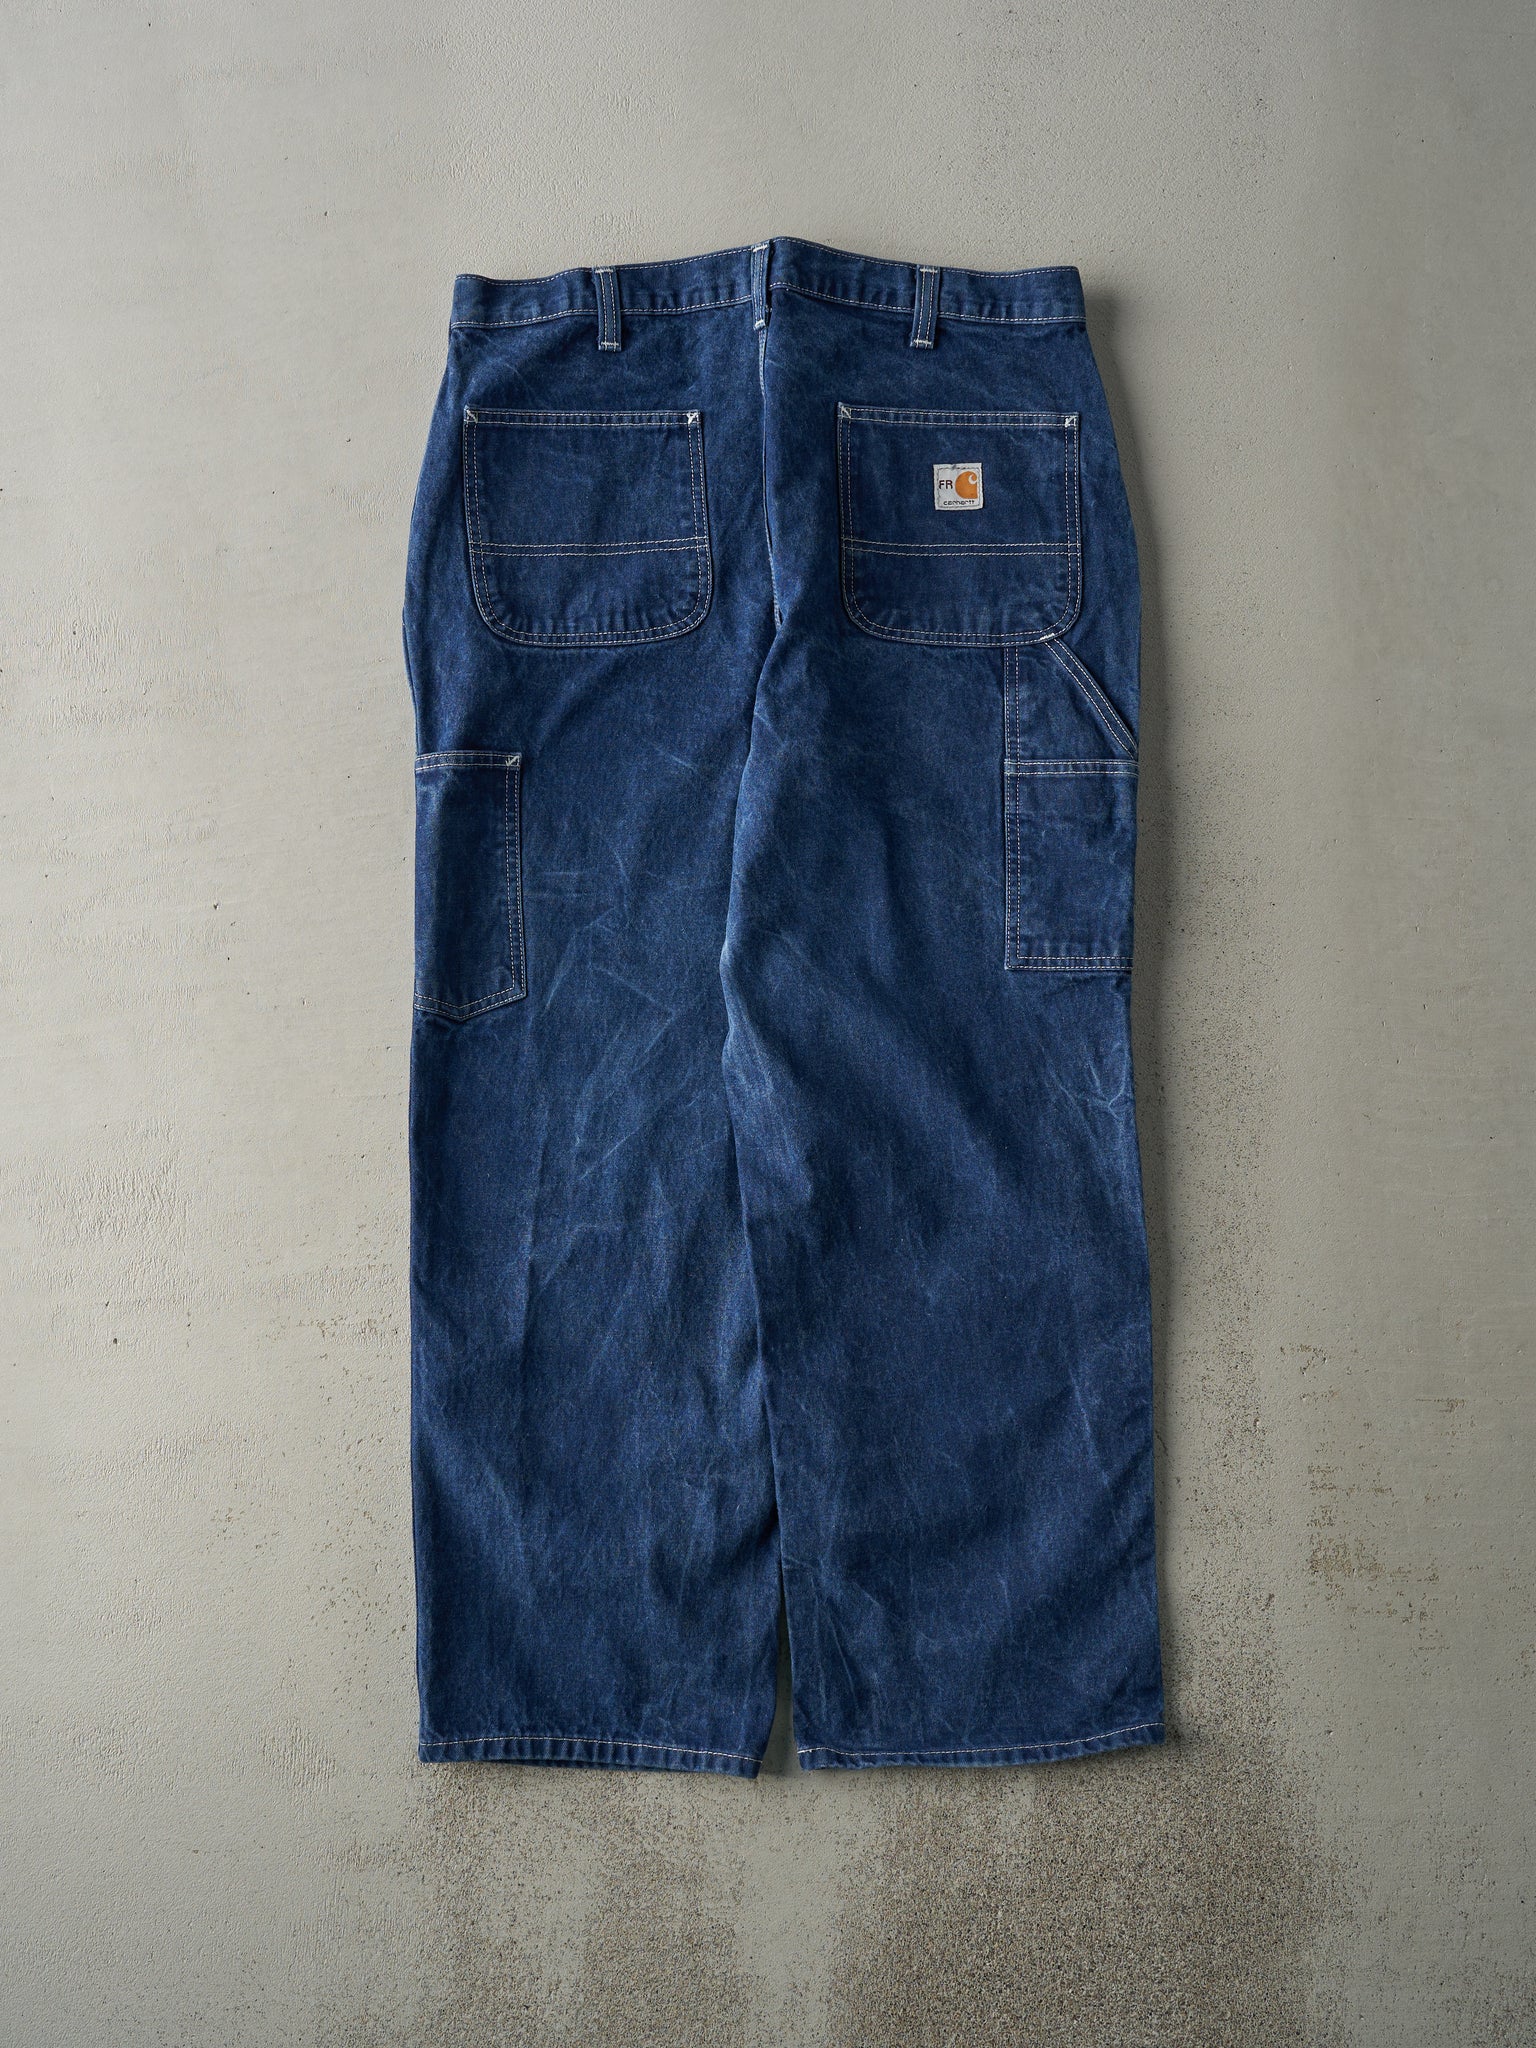 Vintage 90s Dark Wash Fire Resistant Carhartt Workwear Jeans (37x29.5)